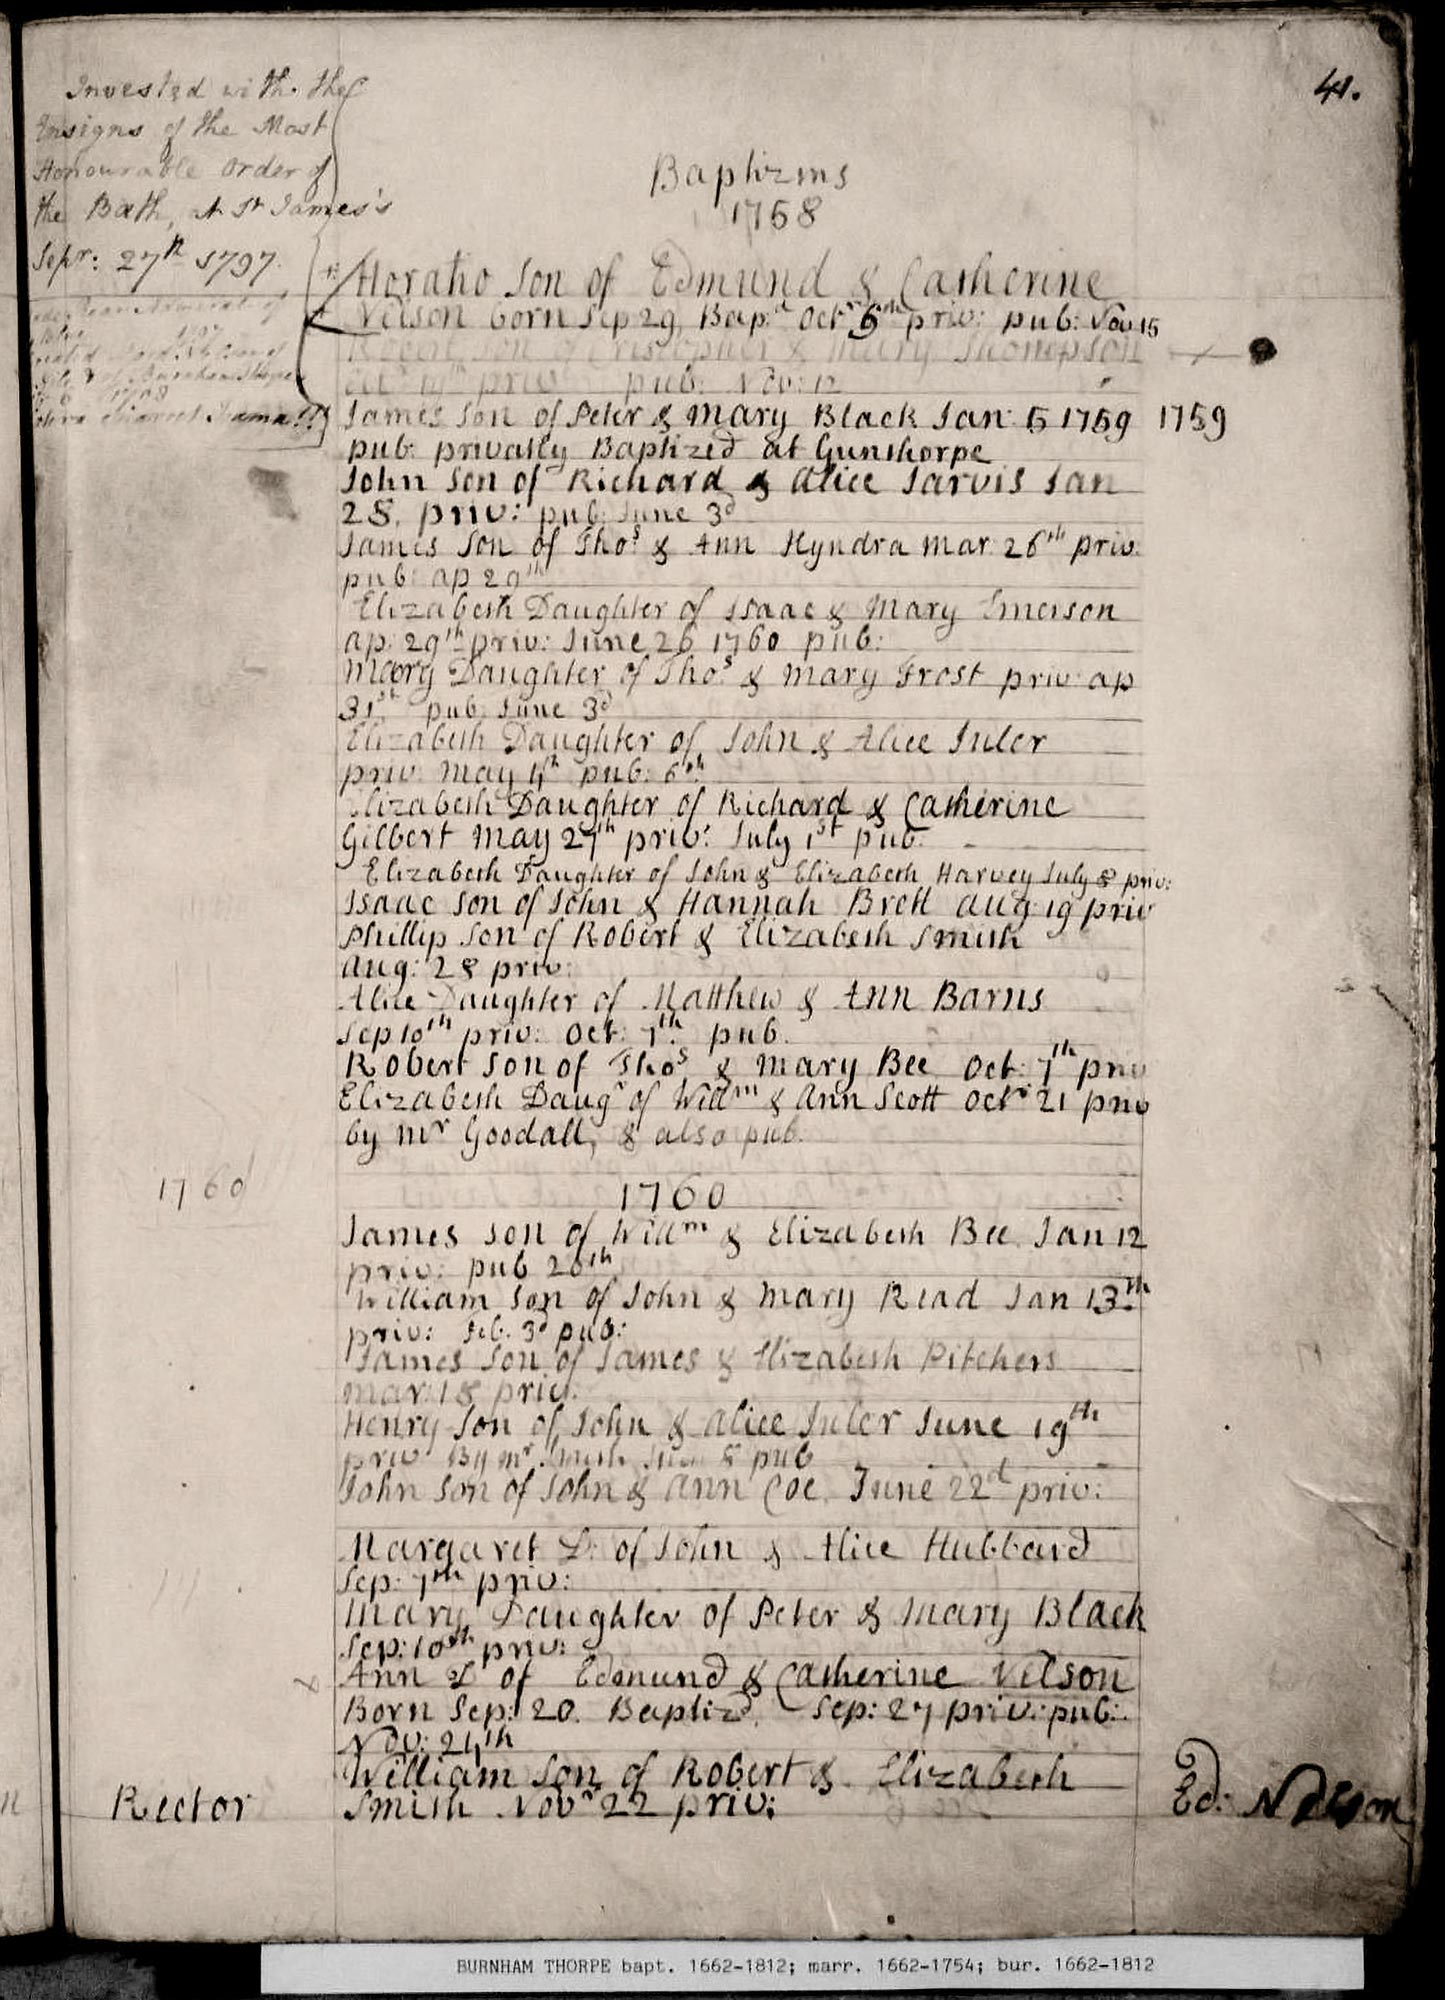 Parish Register showing Nelson's Baptism